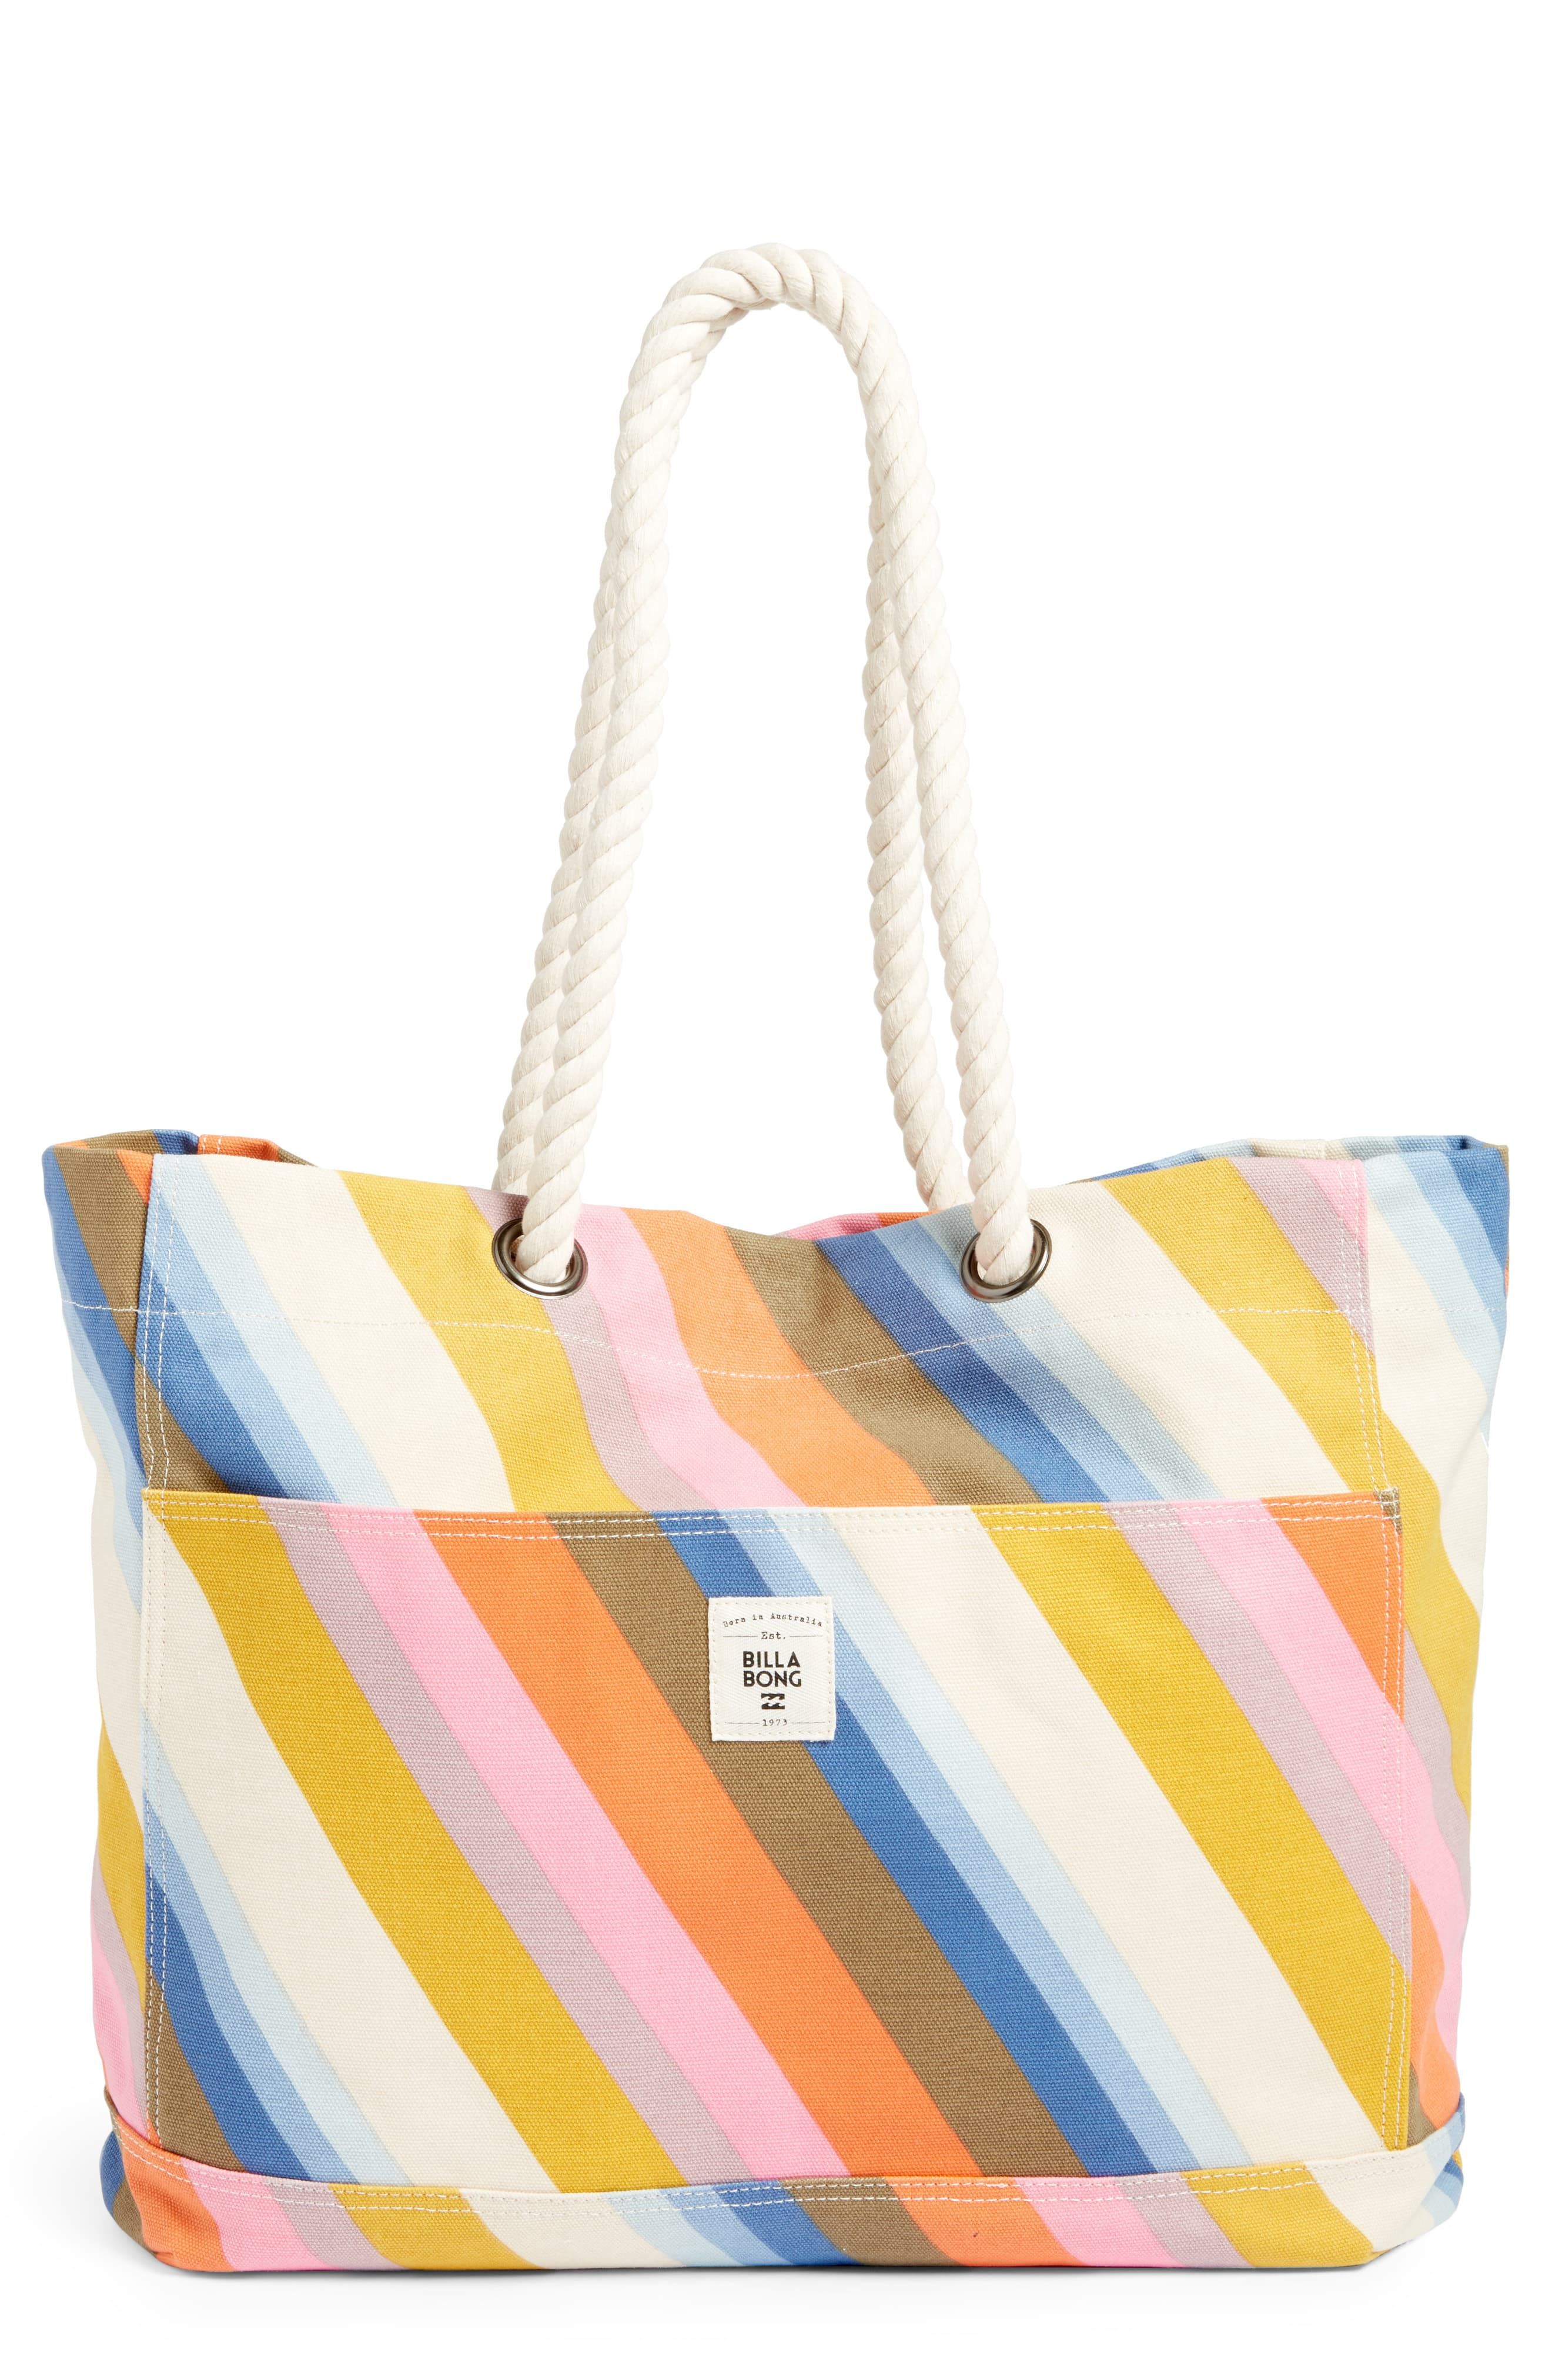 stylish beach bags 2019